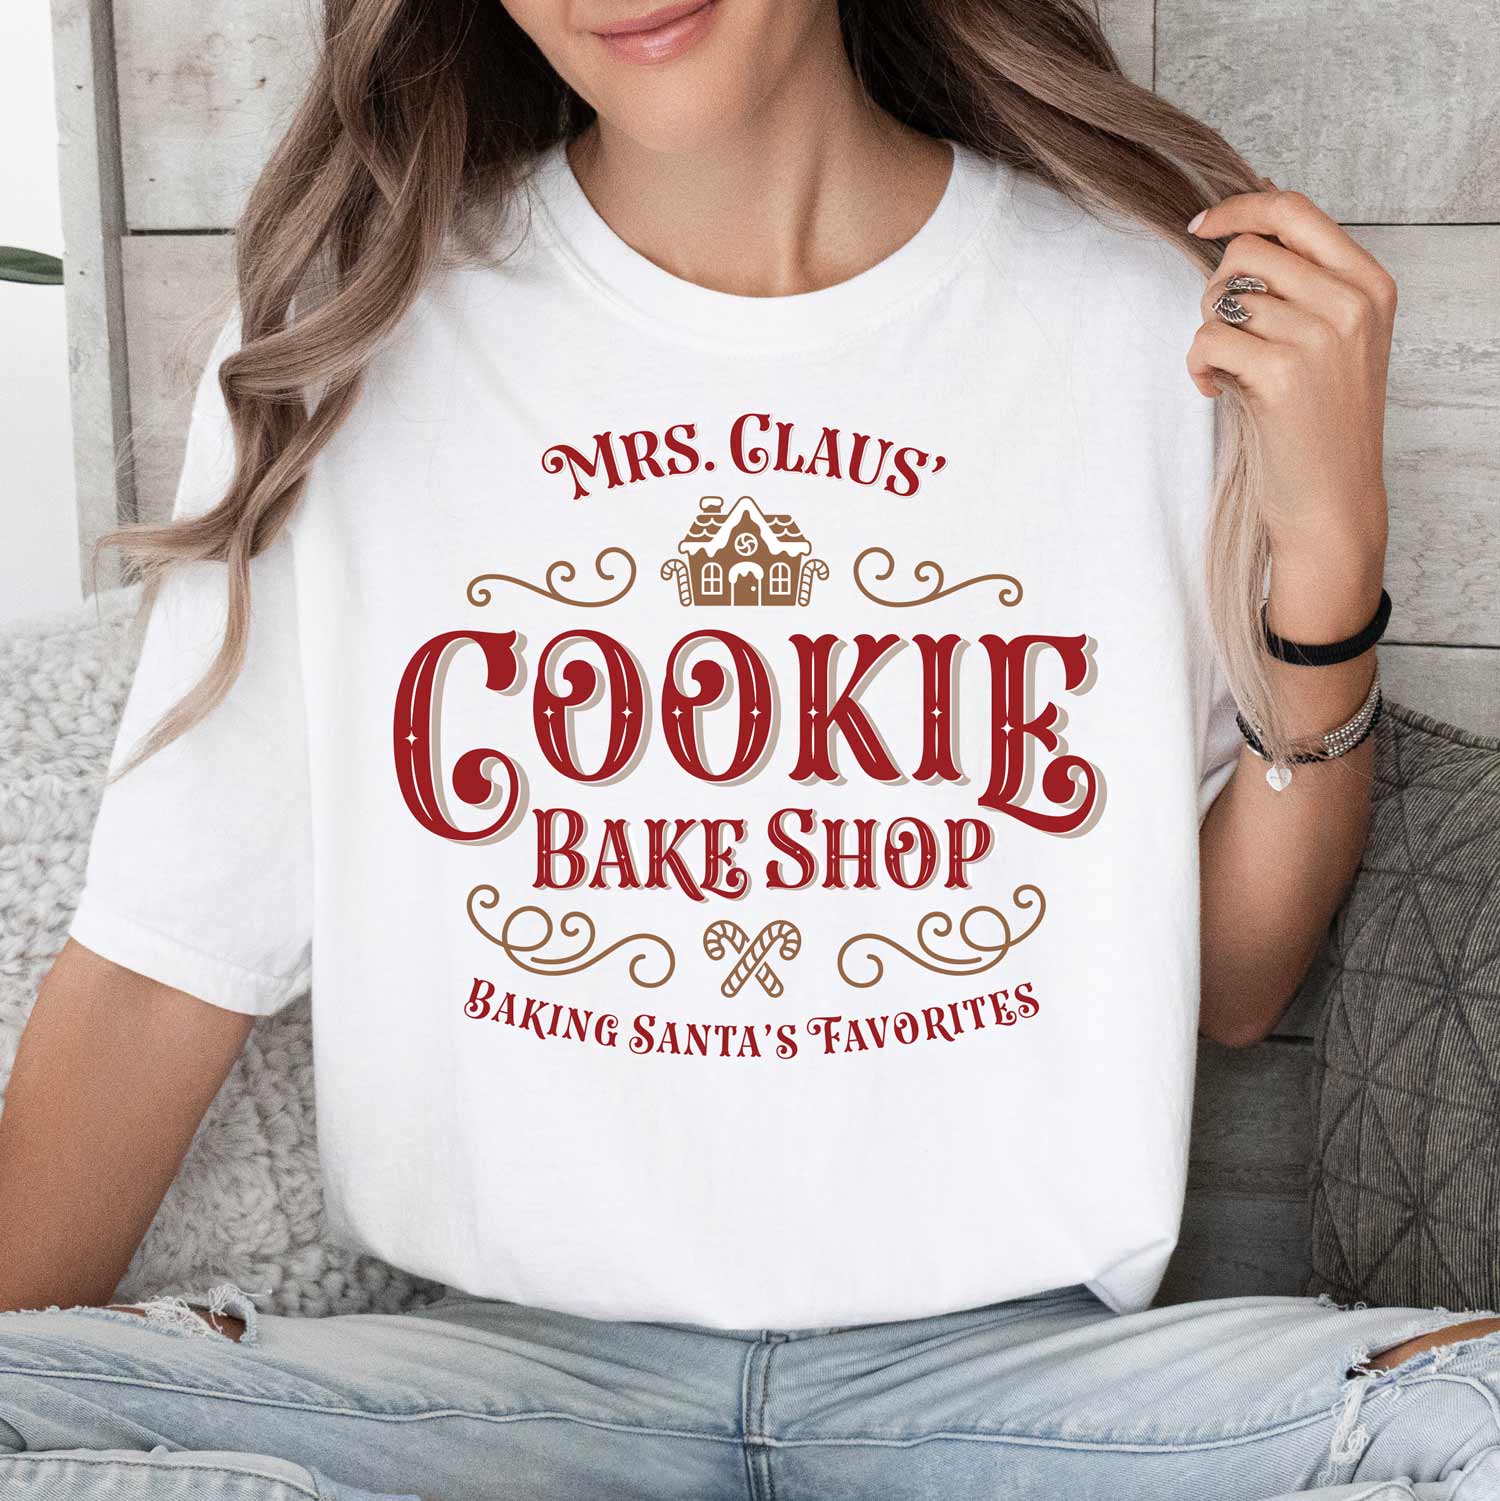 mrs. claus' cookie bake shop shirt